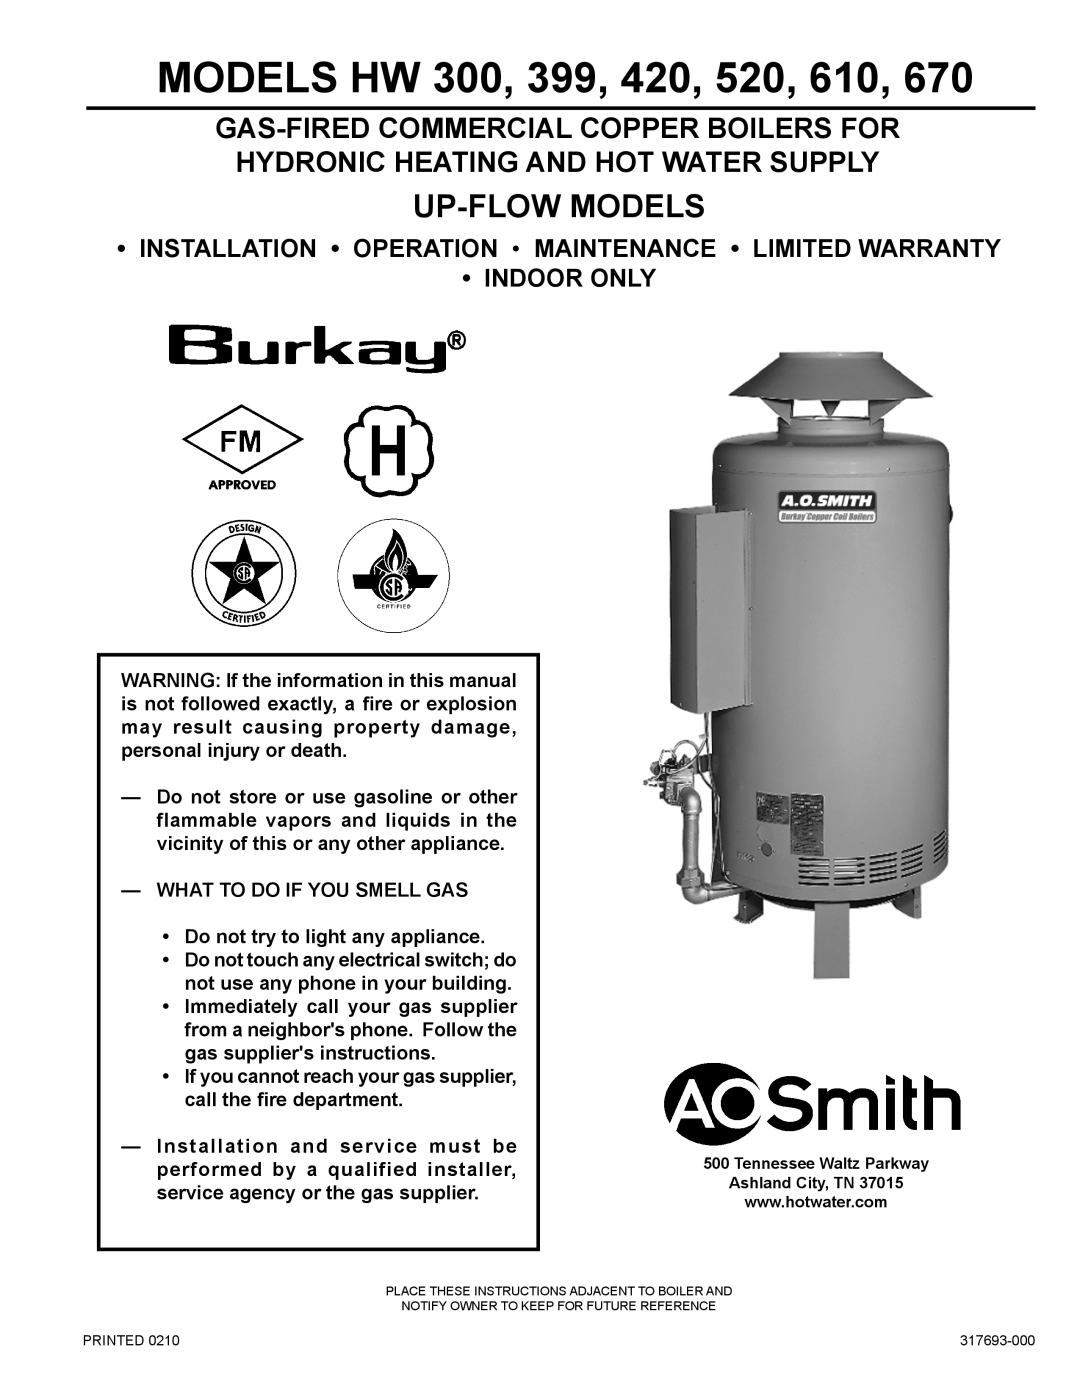 A.O. Smith HW 610 warranty MODELS HW 300, 399, 420, 520, 610, Up-Flow Models 